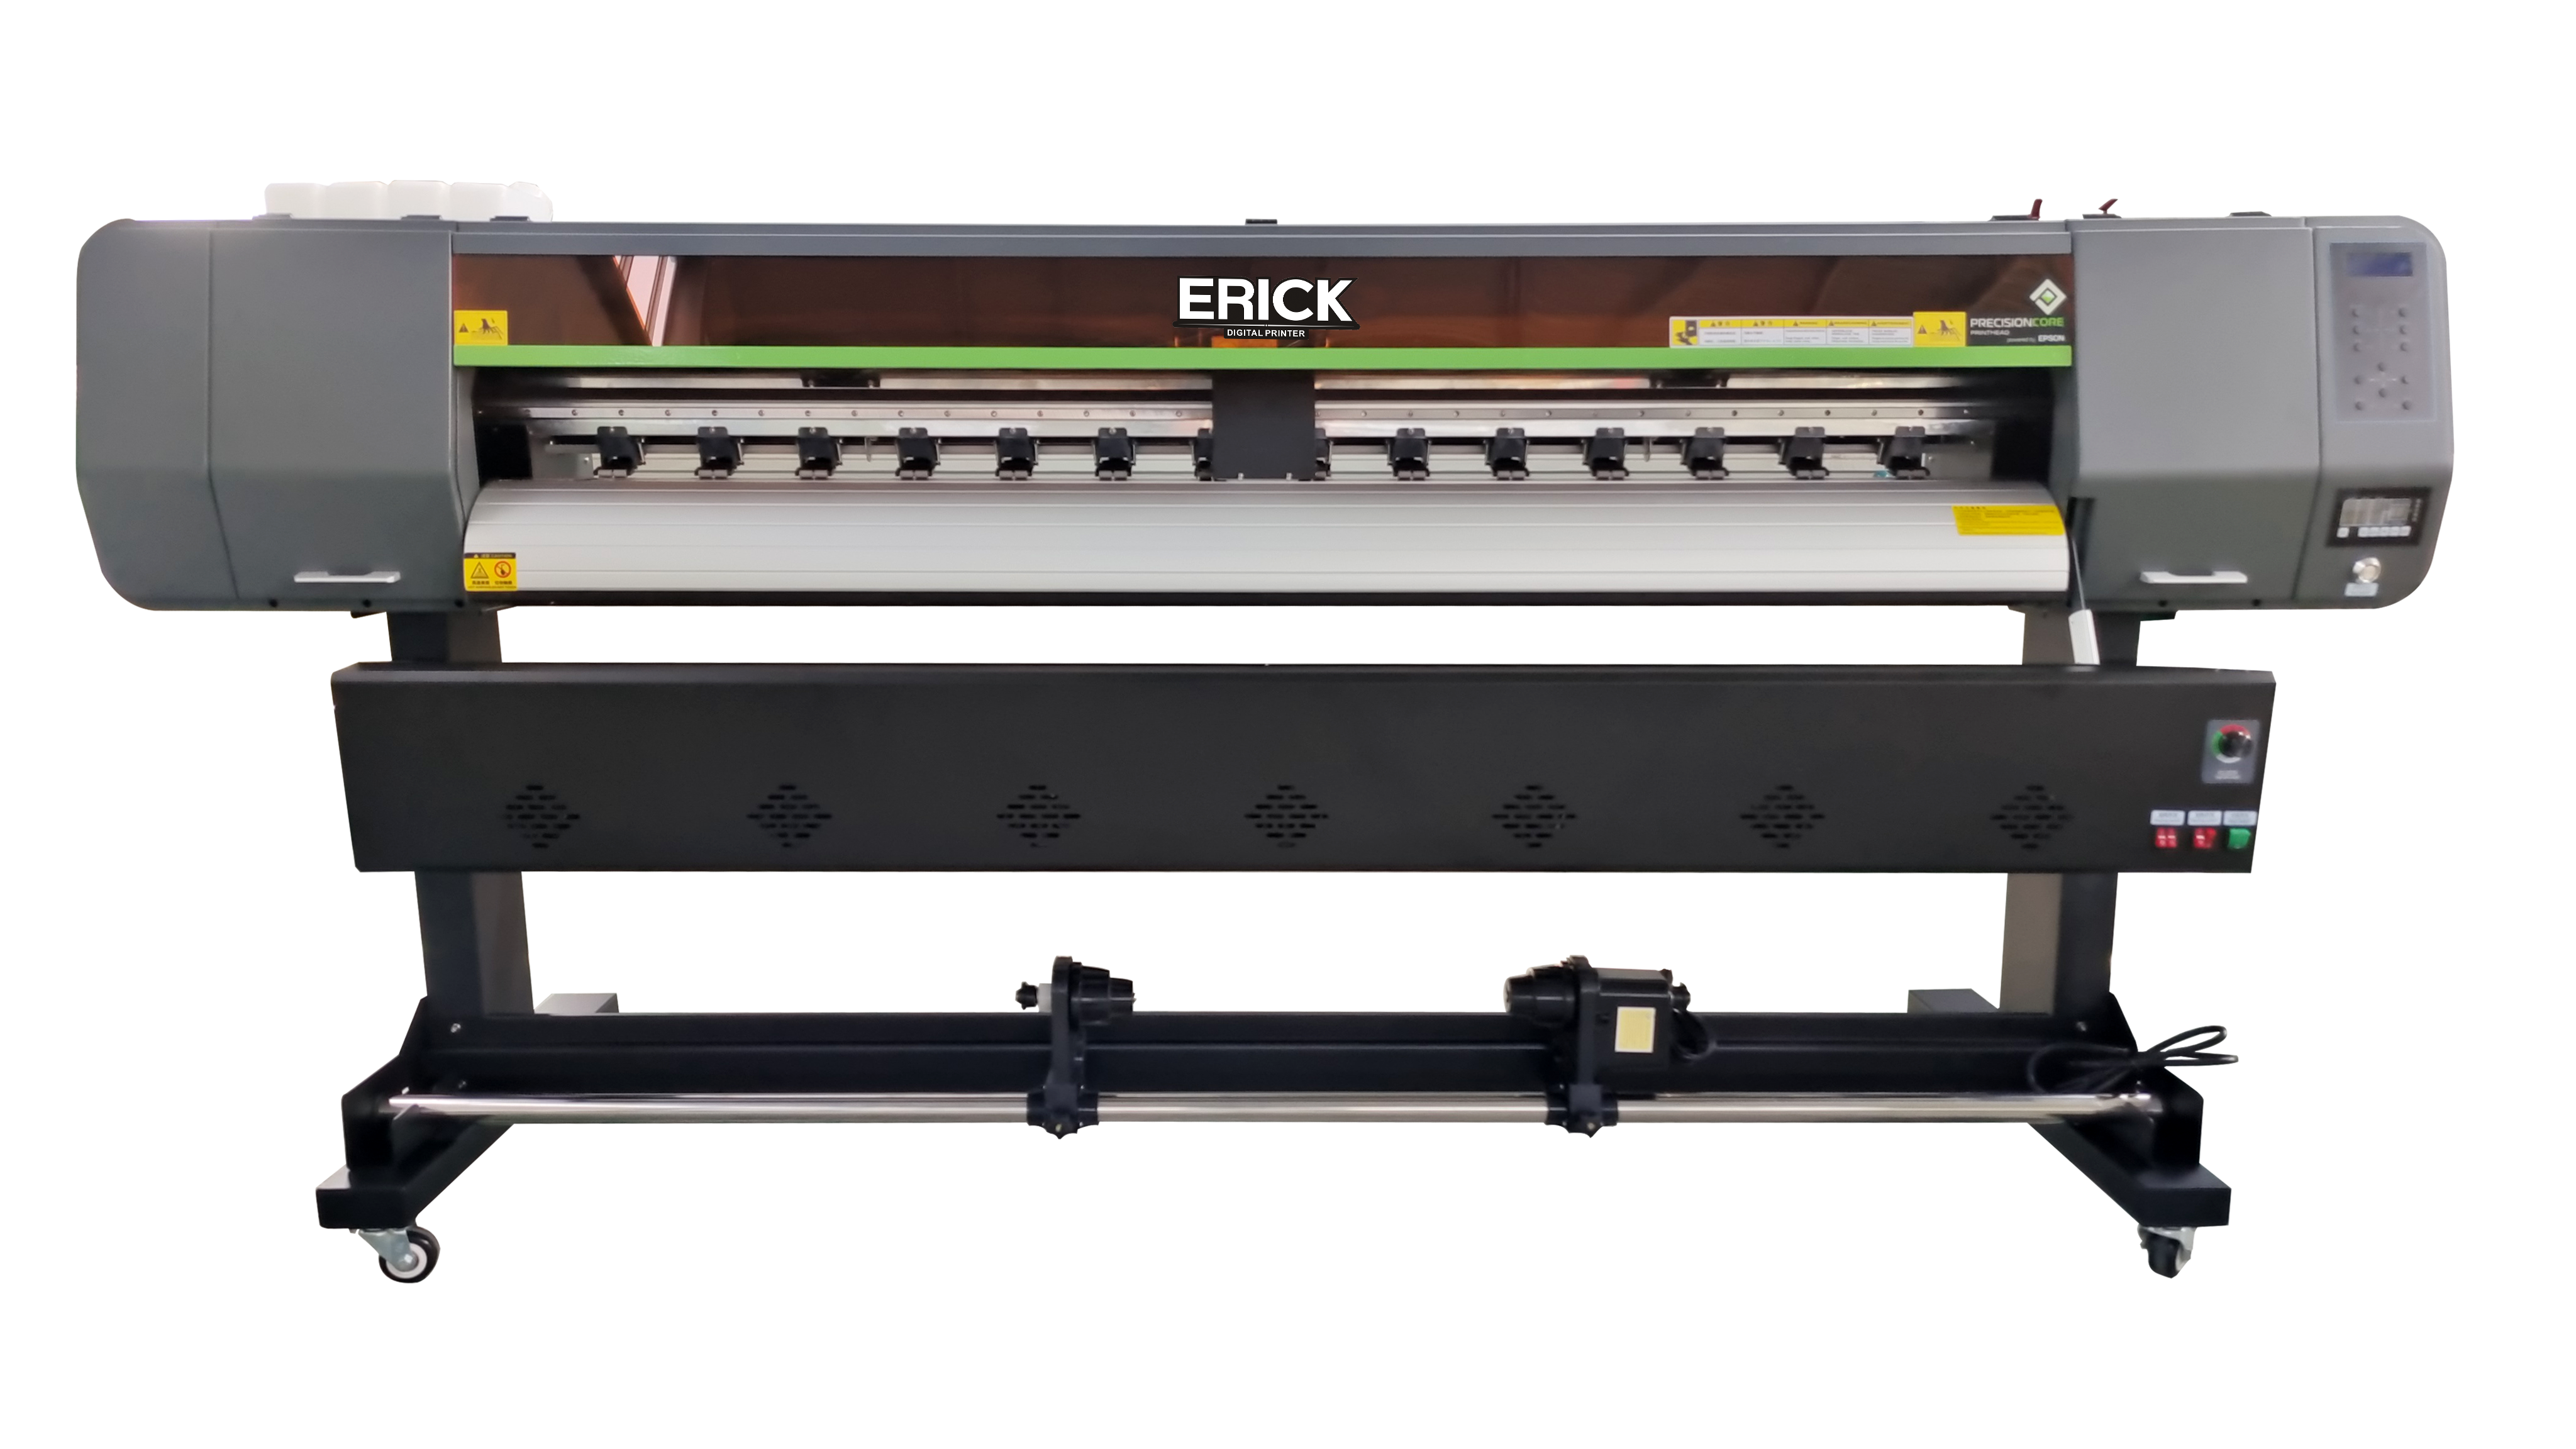 Erick 1801 with 1 pc EP-I3200-A1/E1 print heads